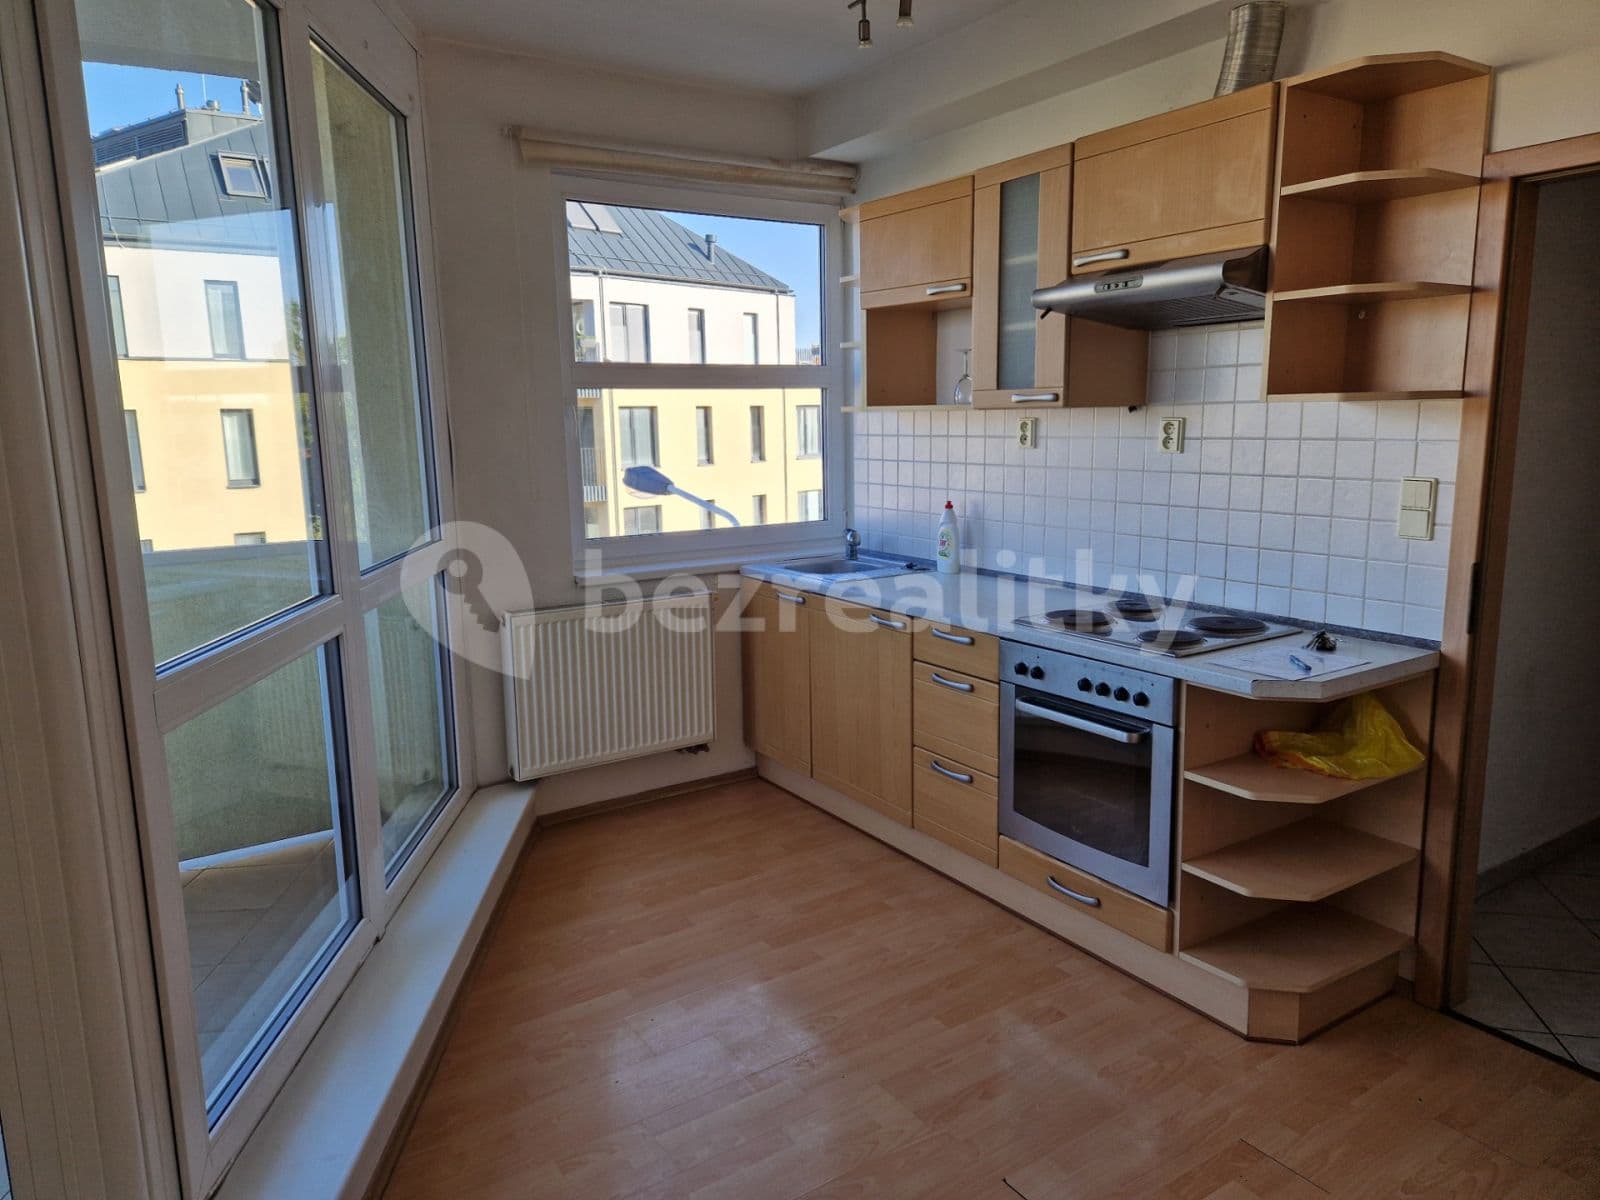 1 bedroom with open-plan kitchen flat to rent, 44 m², Internacionální, Prague, Prague